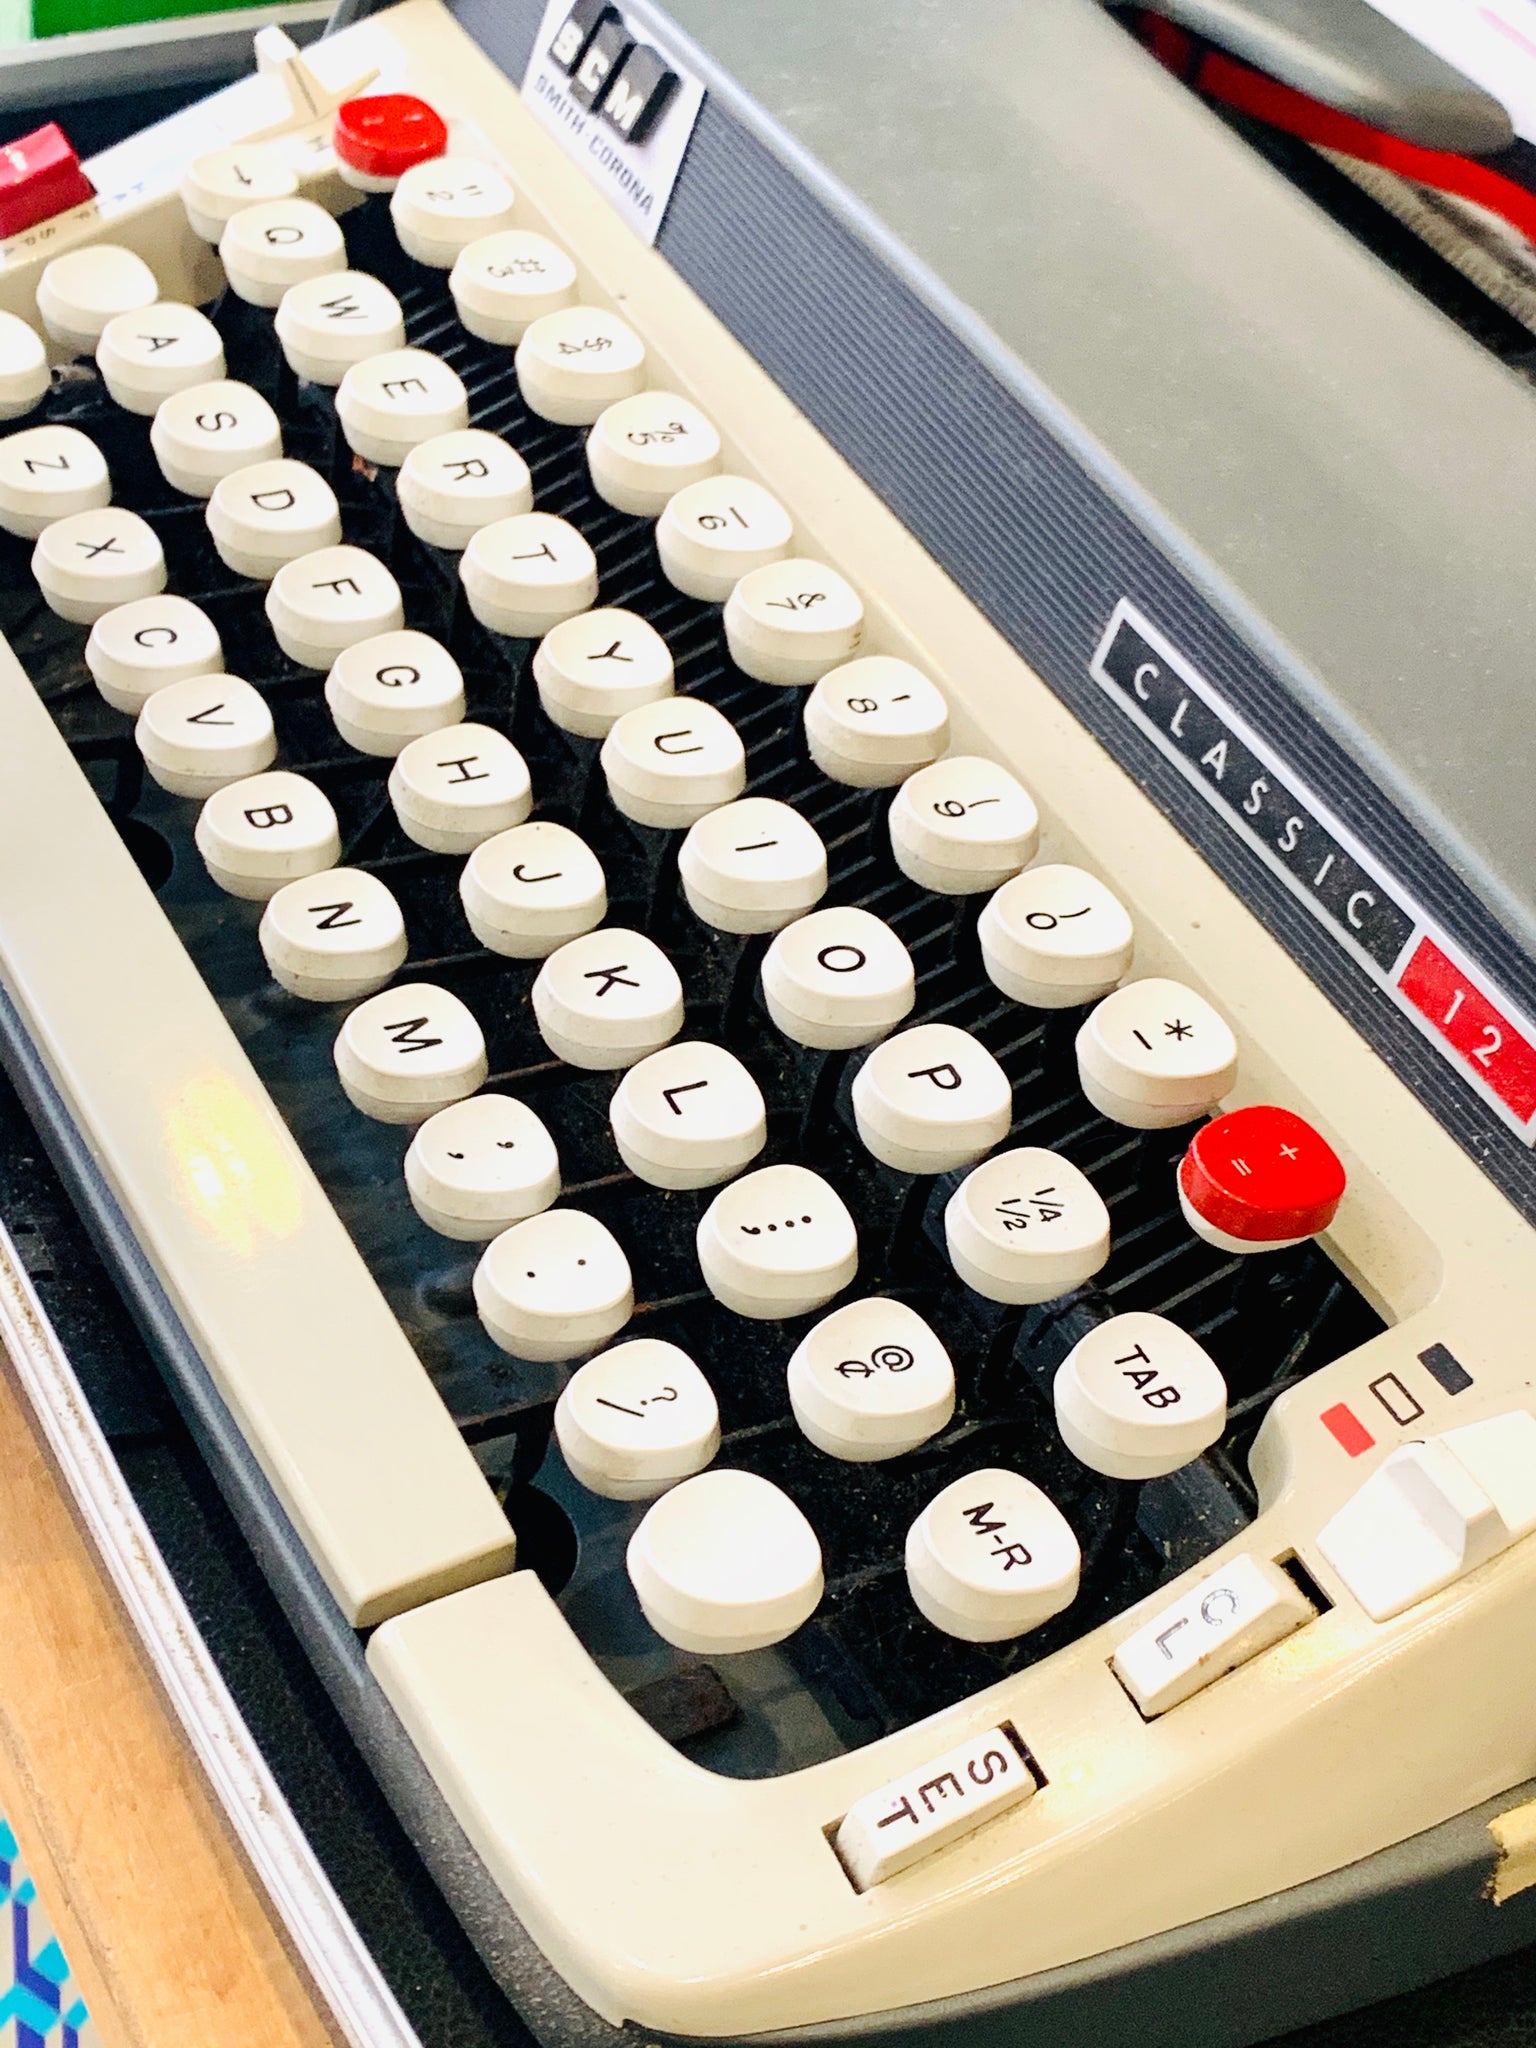 SCM Smith-Corona Classic 12 Typewriter